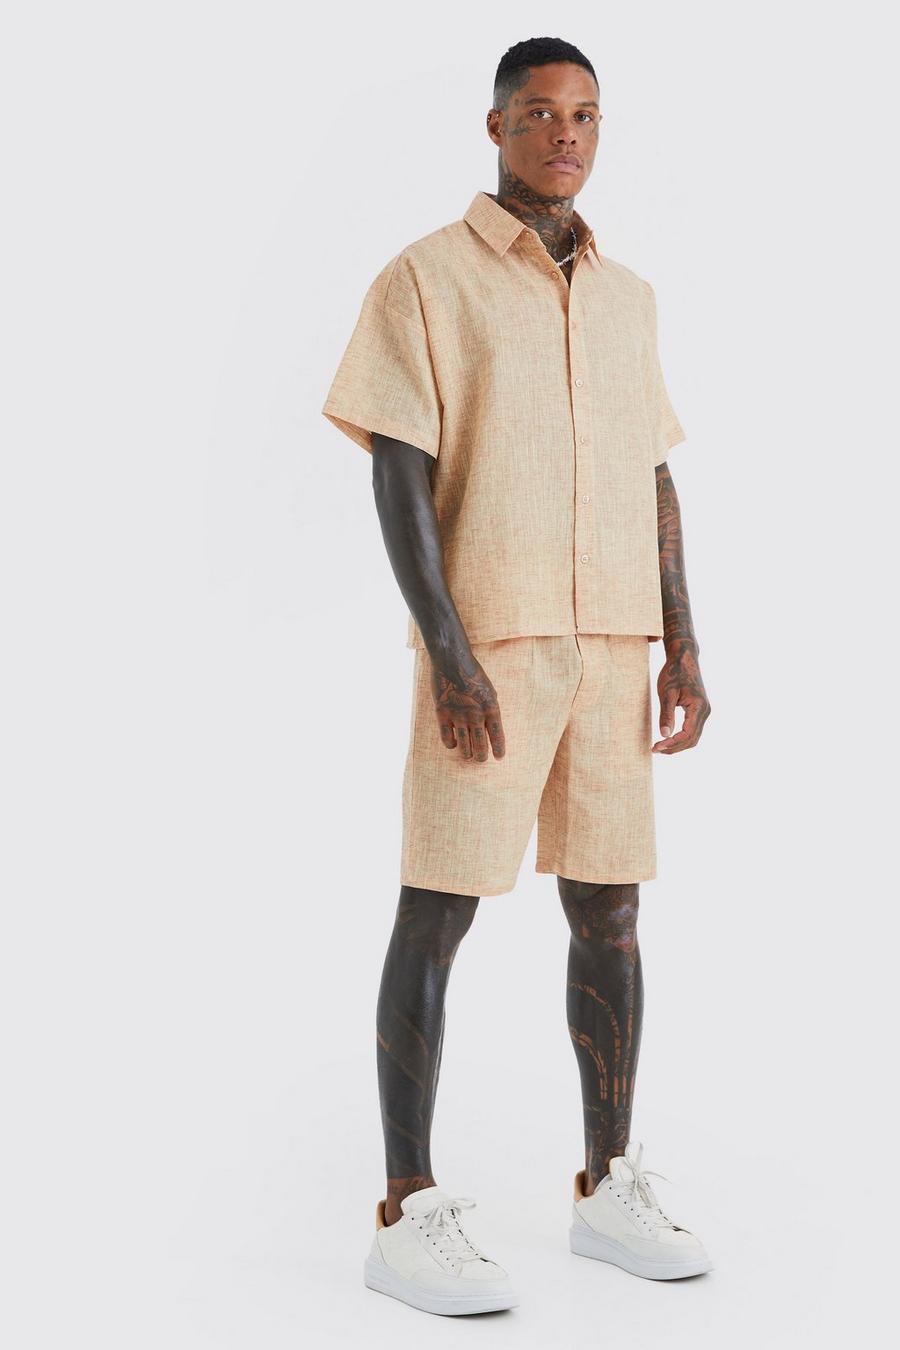 Chocolate brun Short Sleeve Boxy Linen Look Shirt And Short